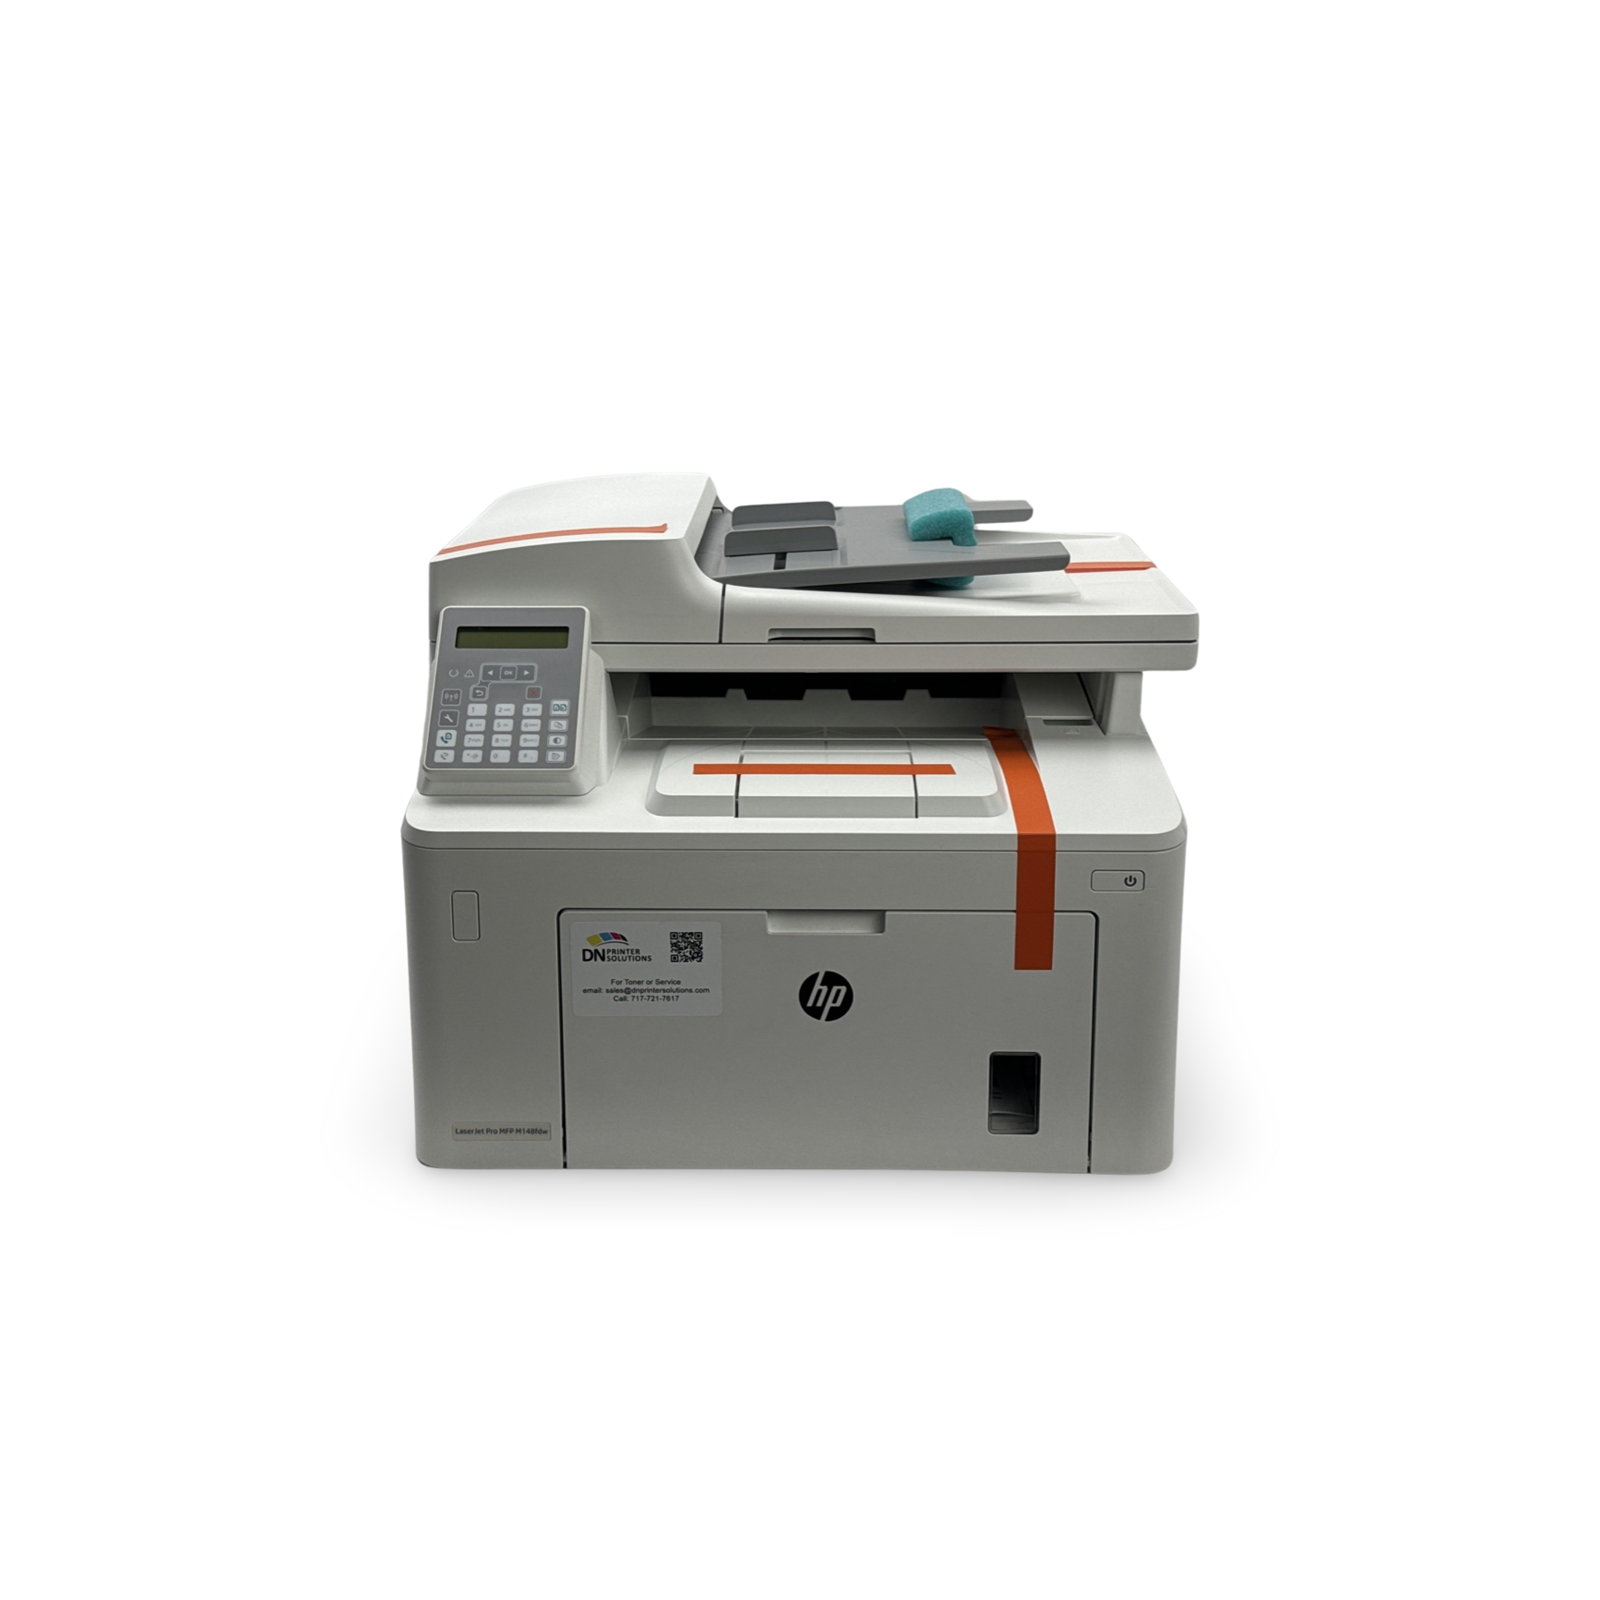 HP LaserJet Pro MFP M148fdw Laser Printer 4PA42A Refurbished